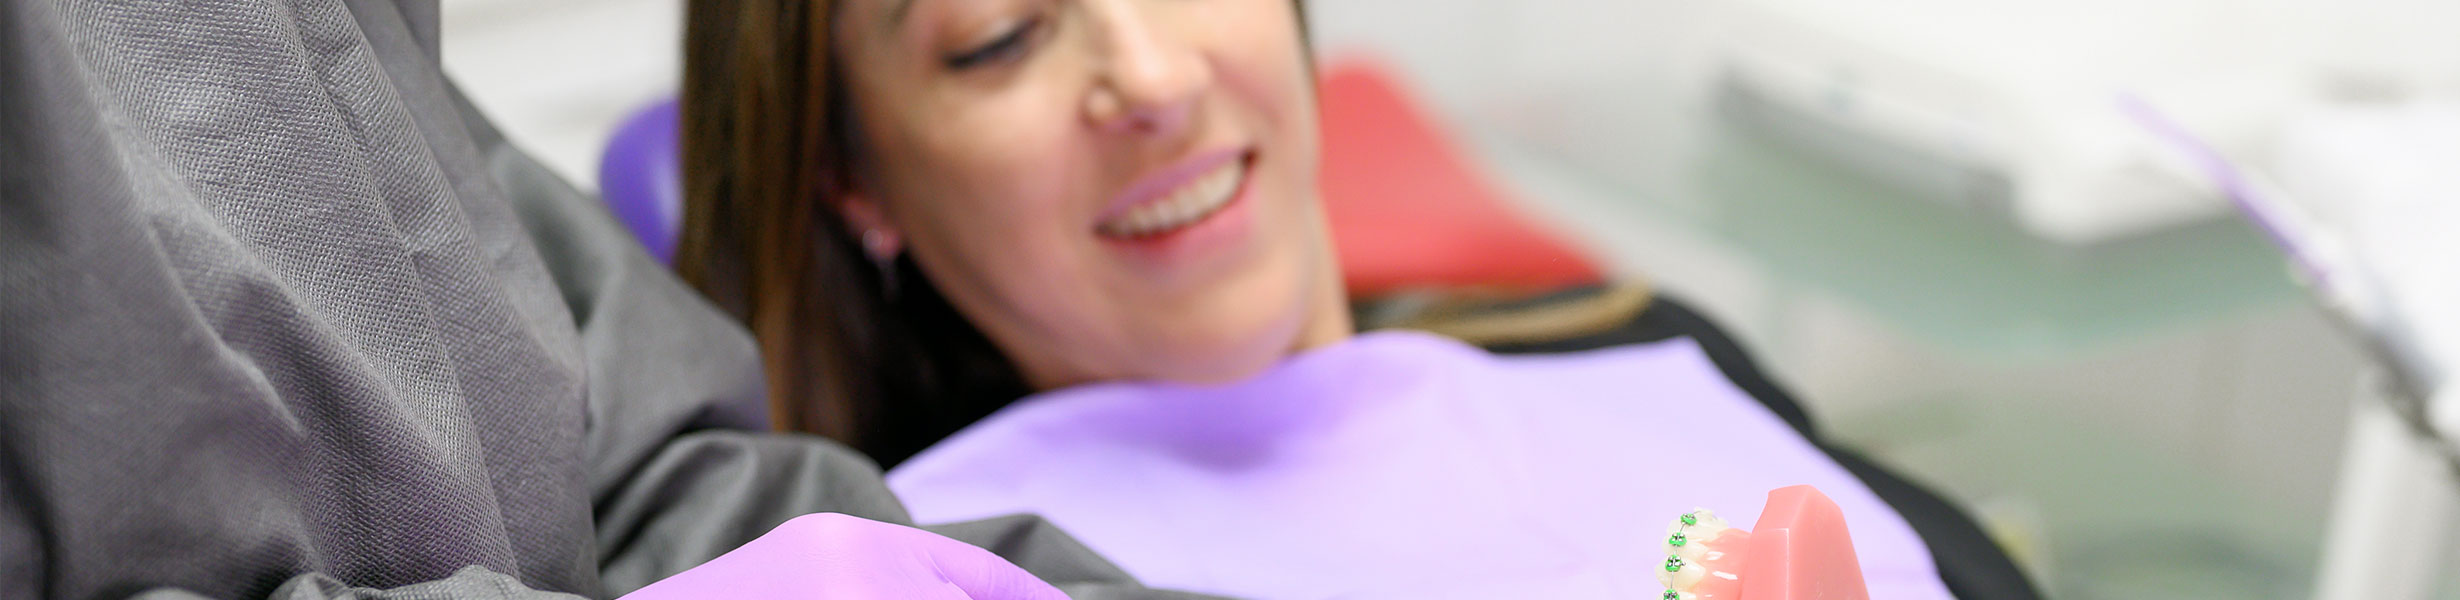 Woman smiling at the dental